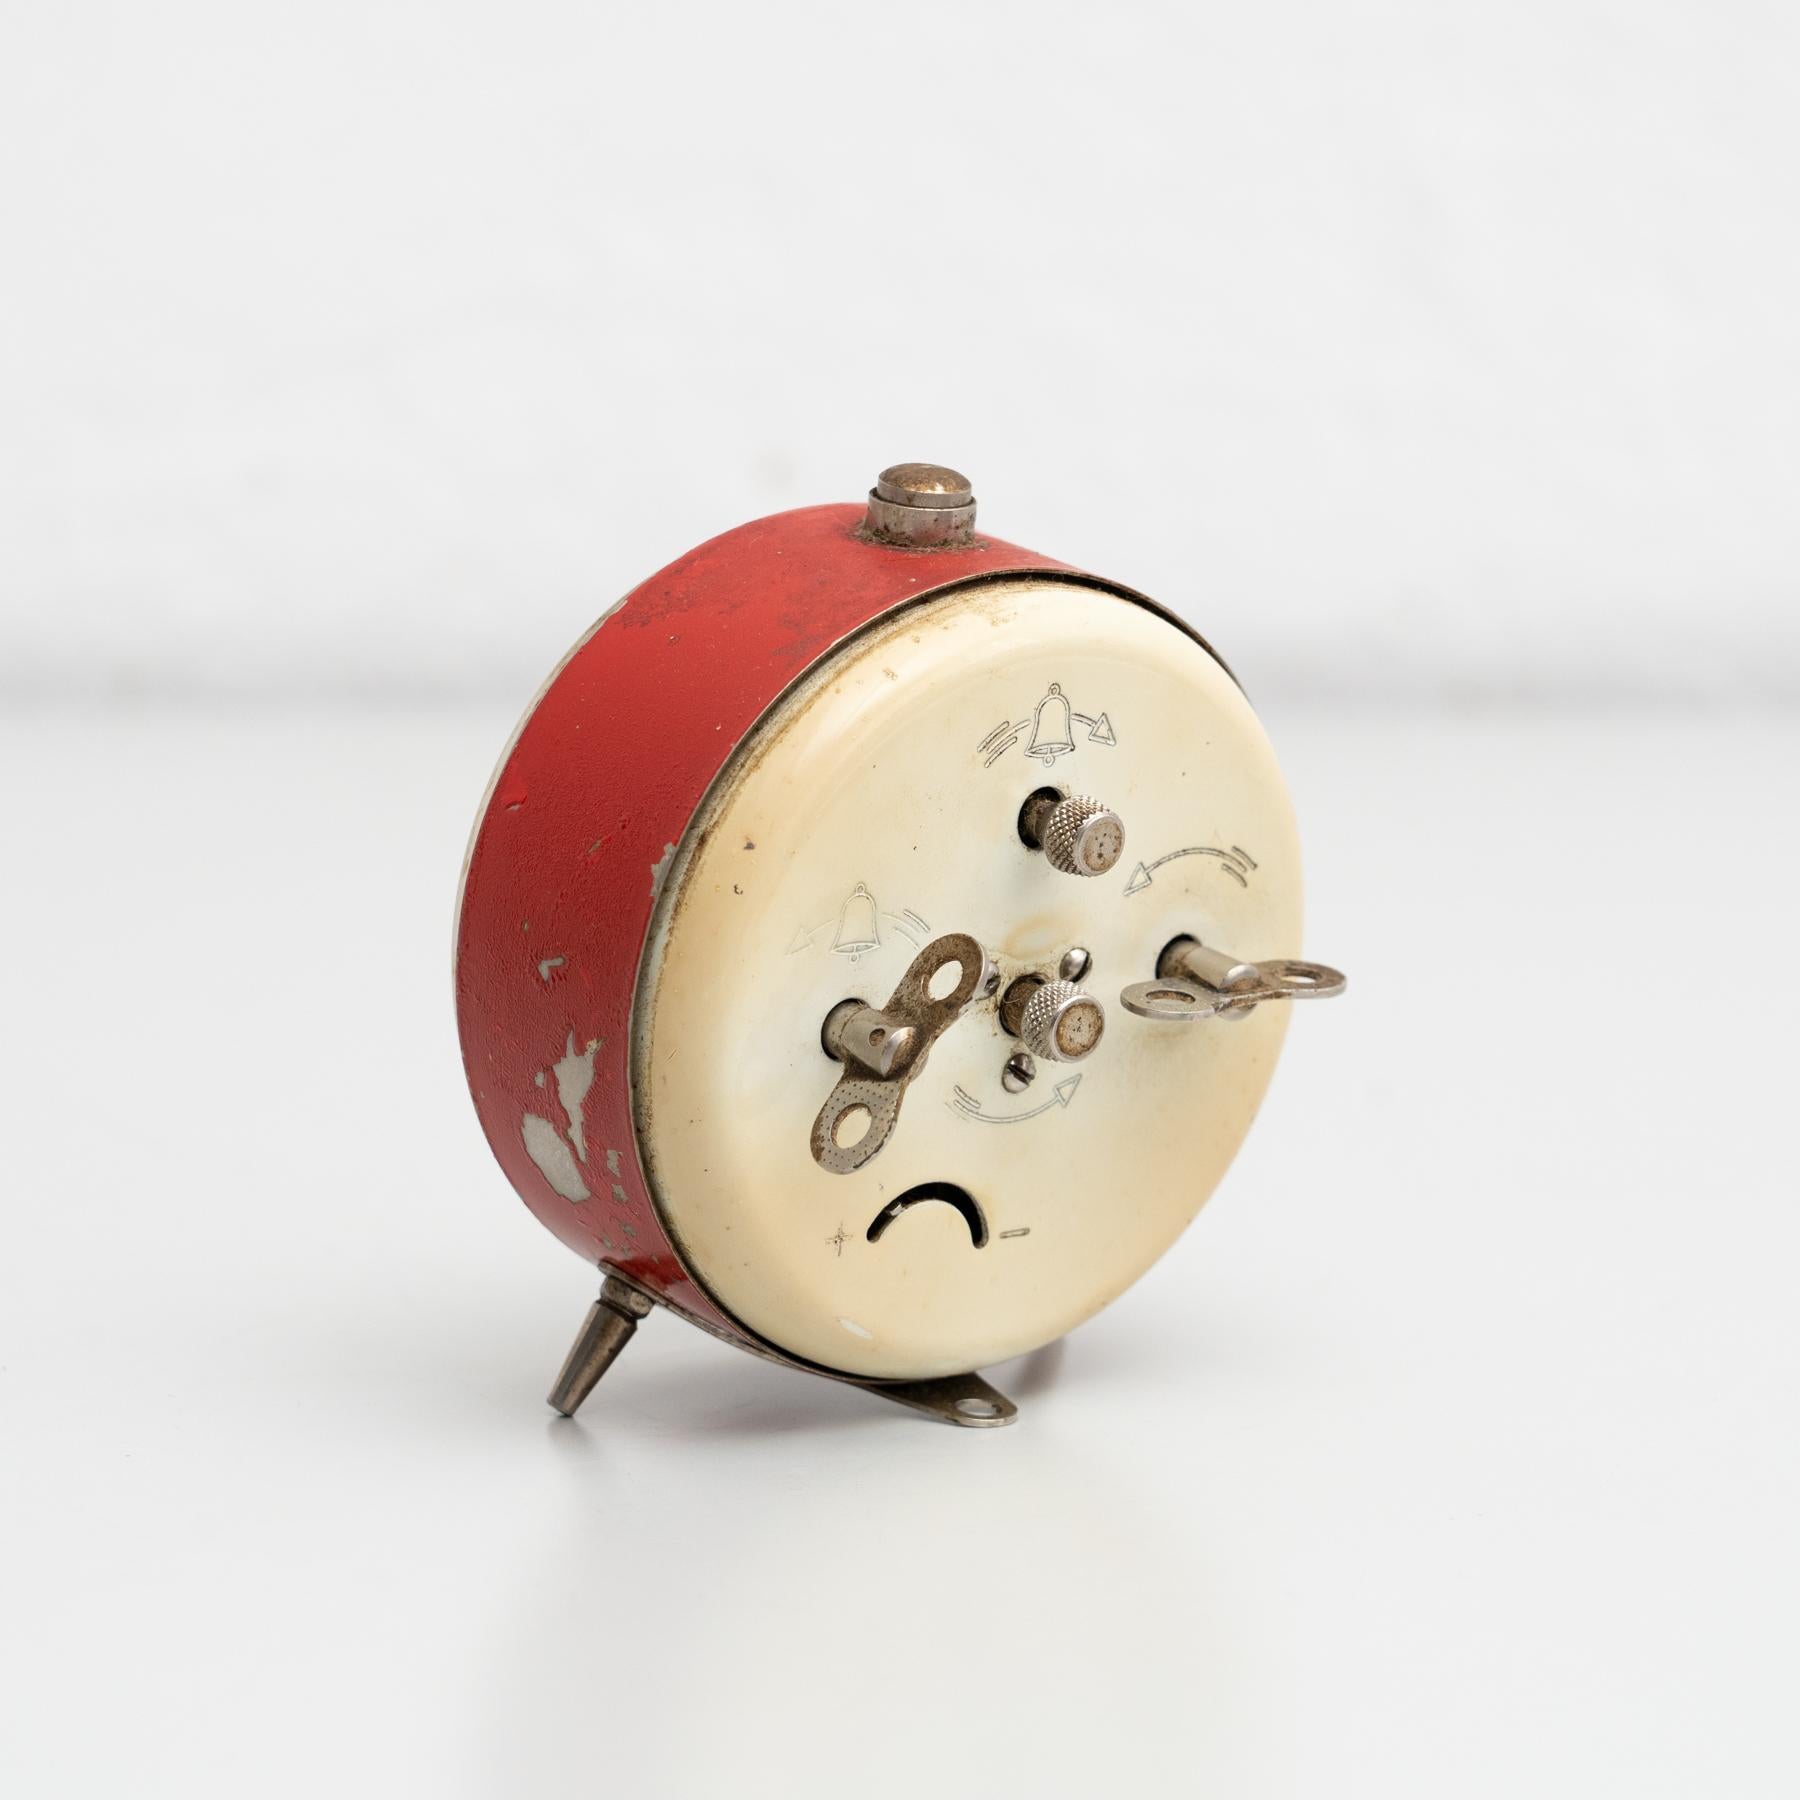 Mid-20th Century Vintage Traditional Spanish Reifor Alarm Clock, circa 1960